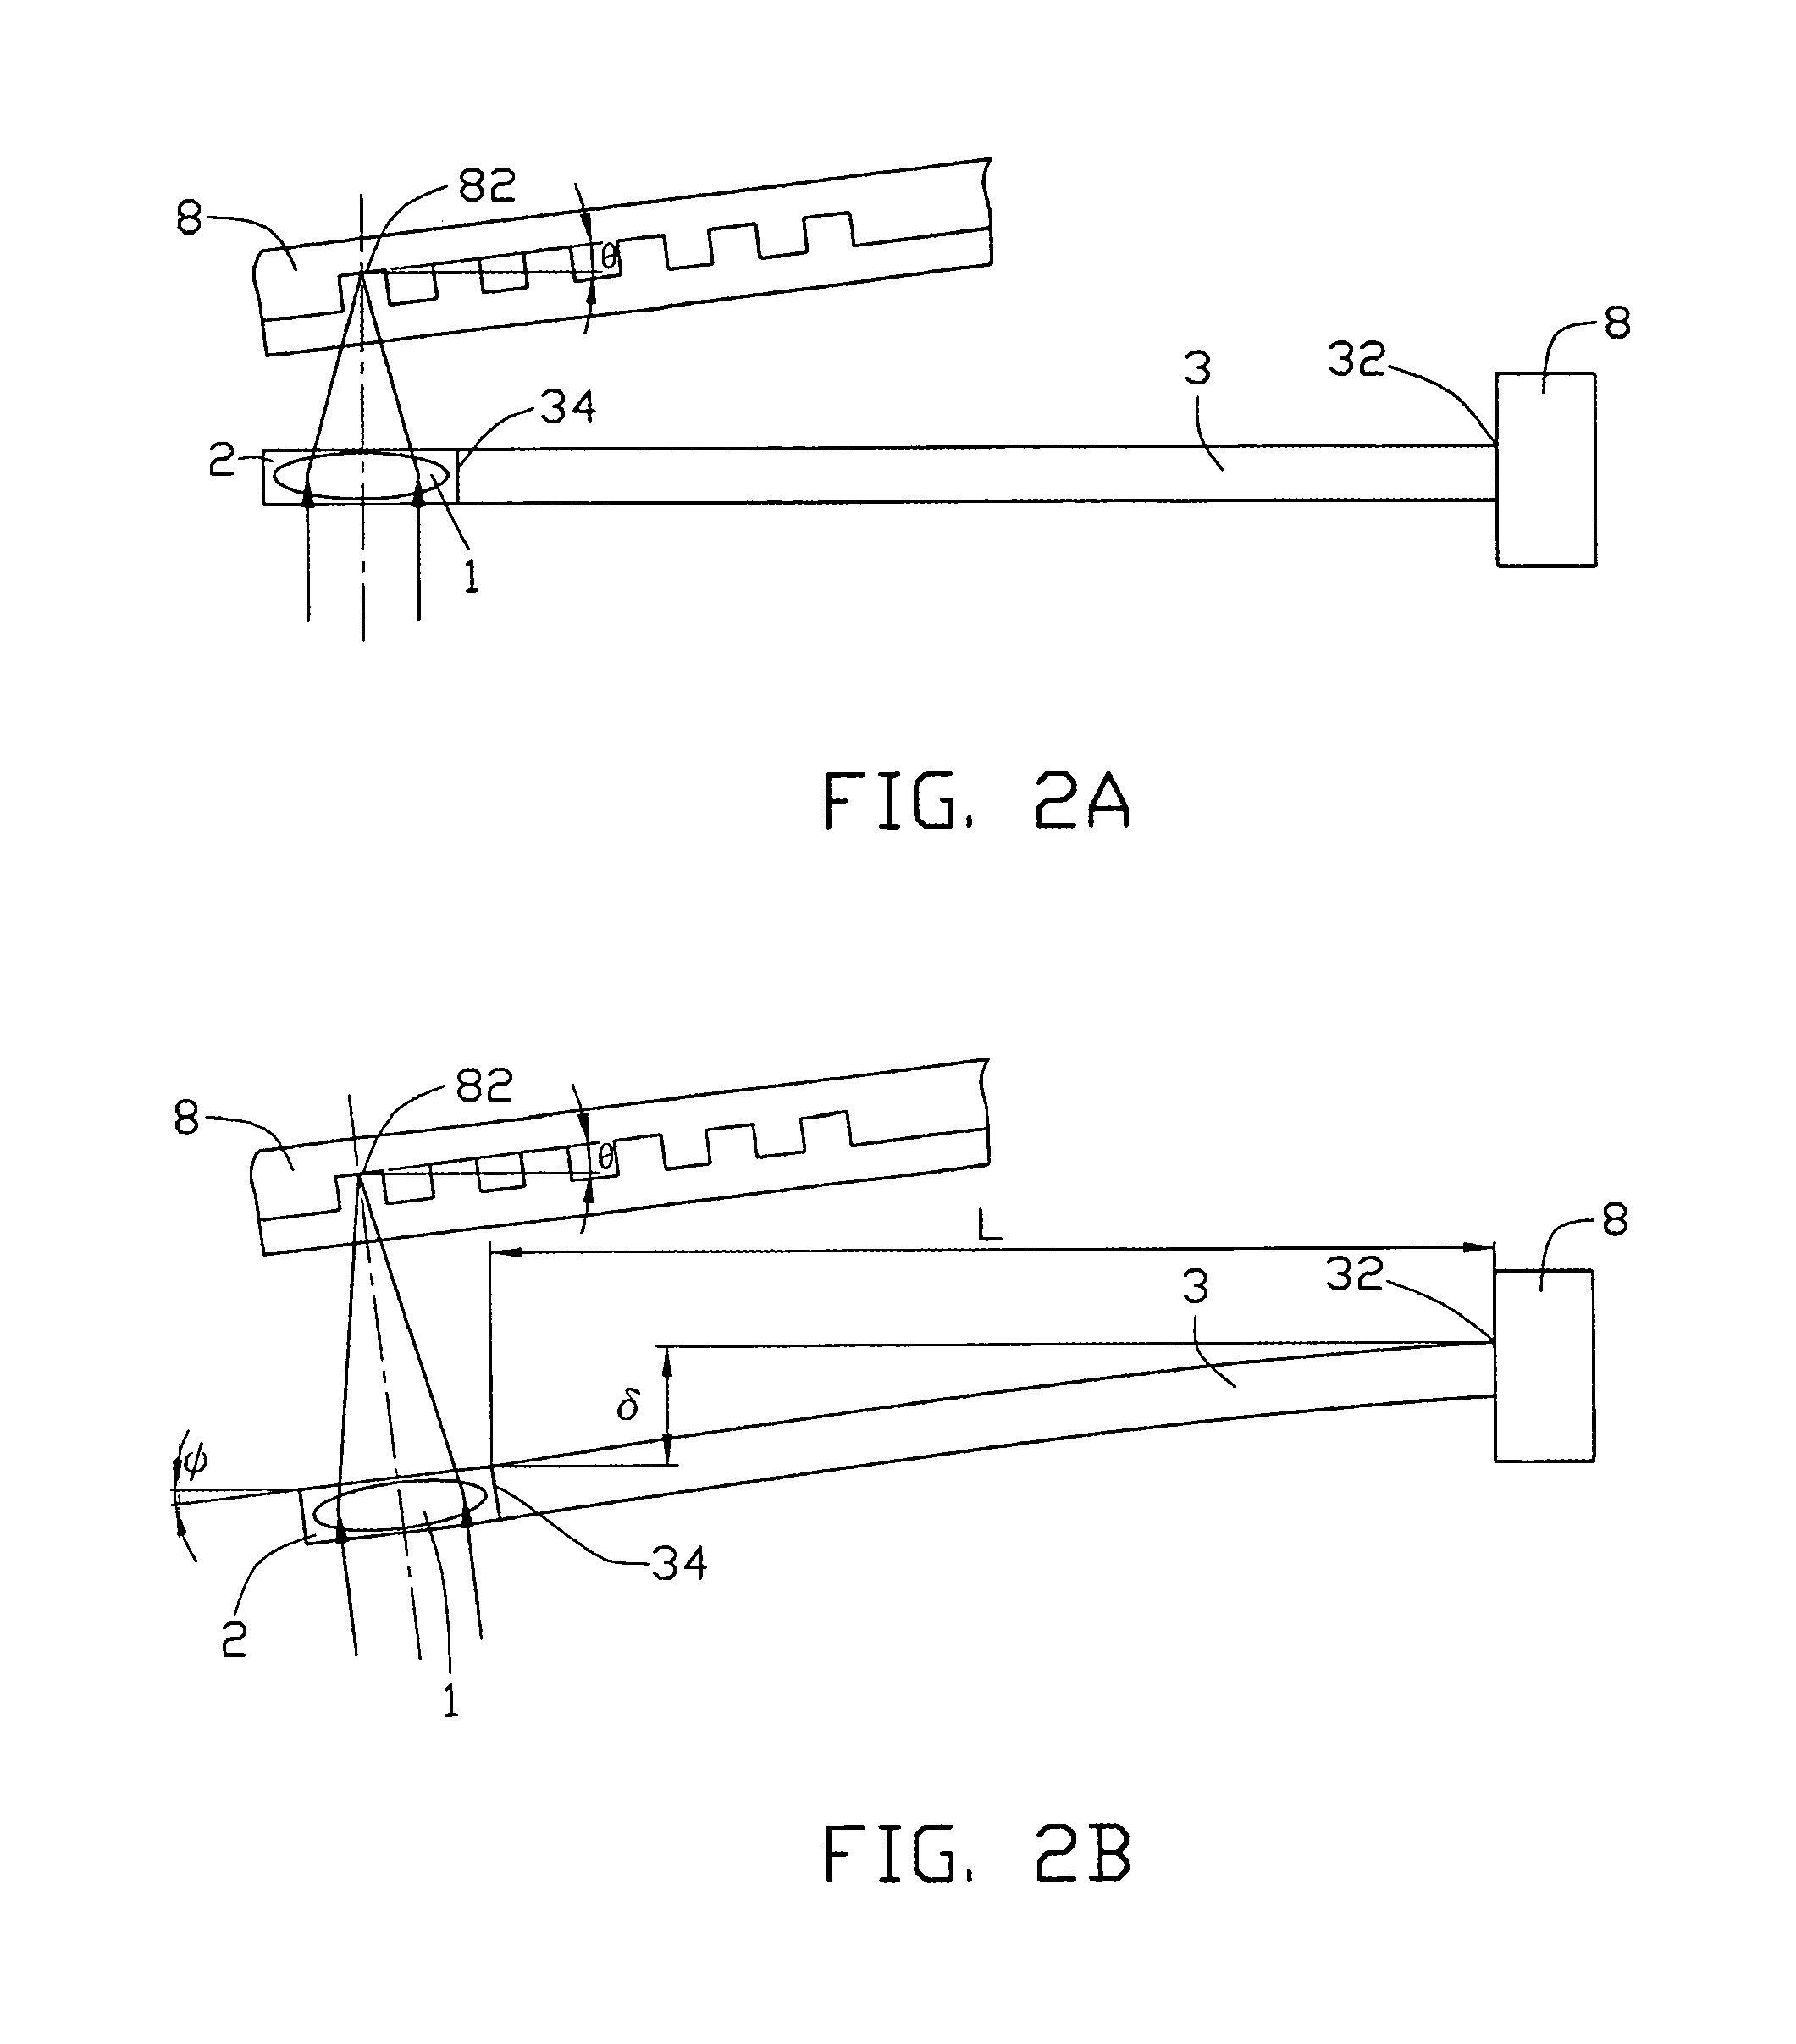 Optical pickup device with a tilt adjusting actuator